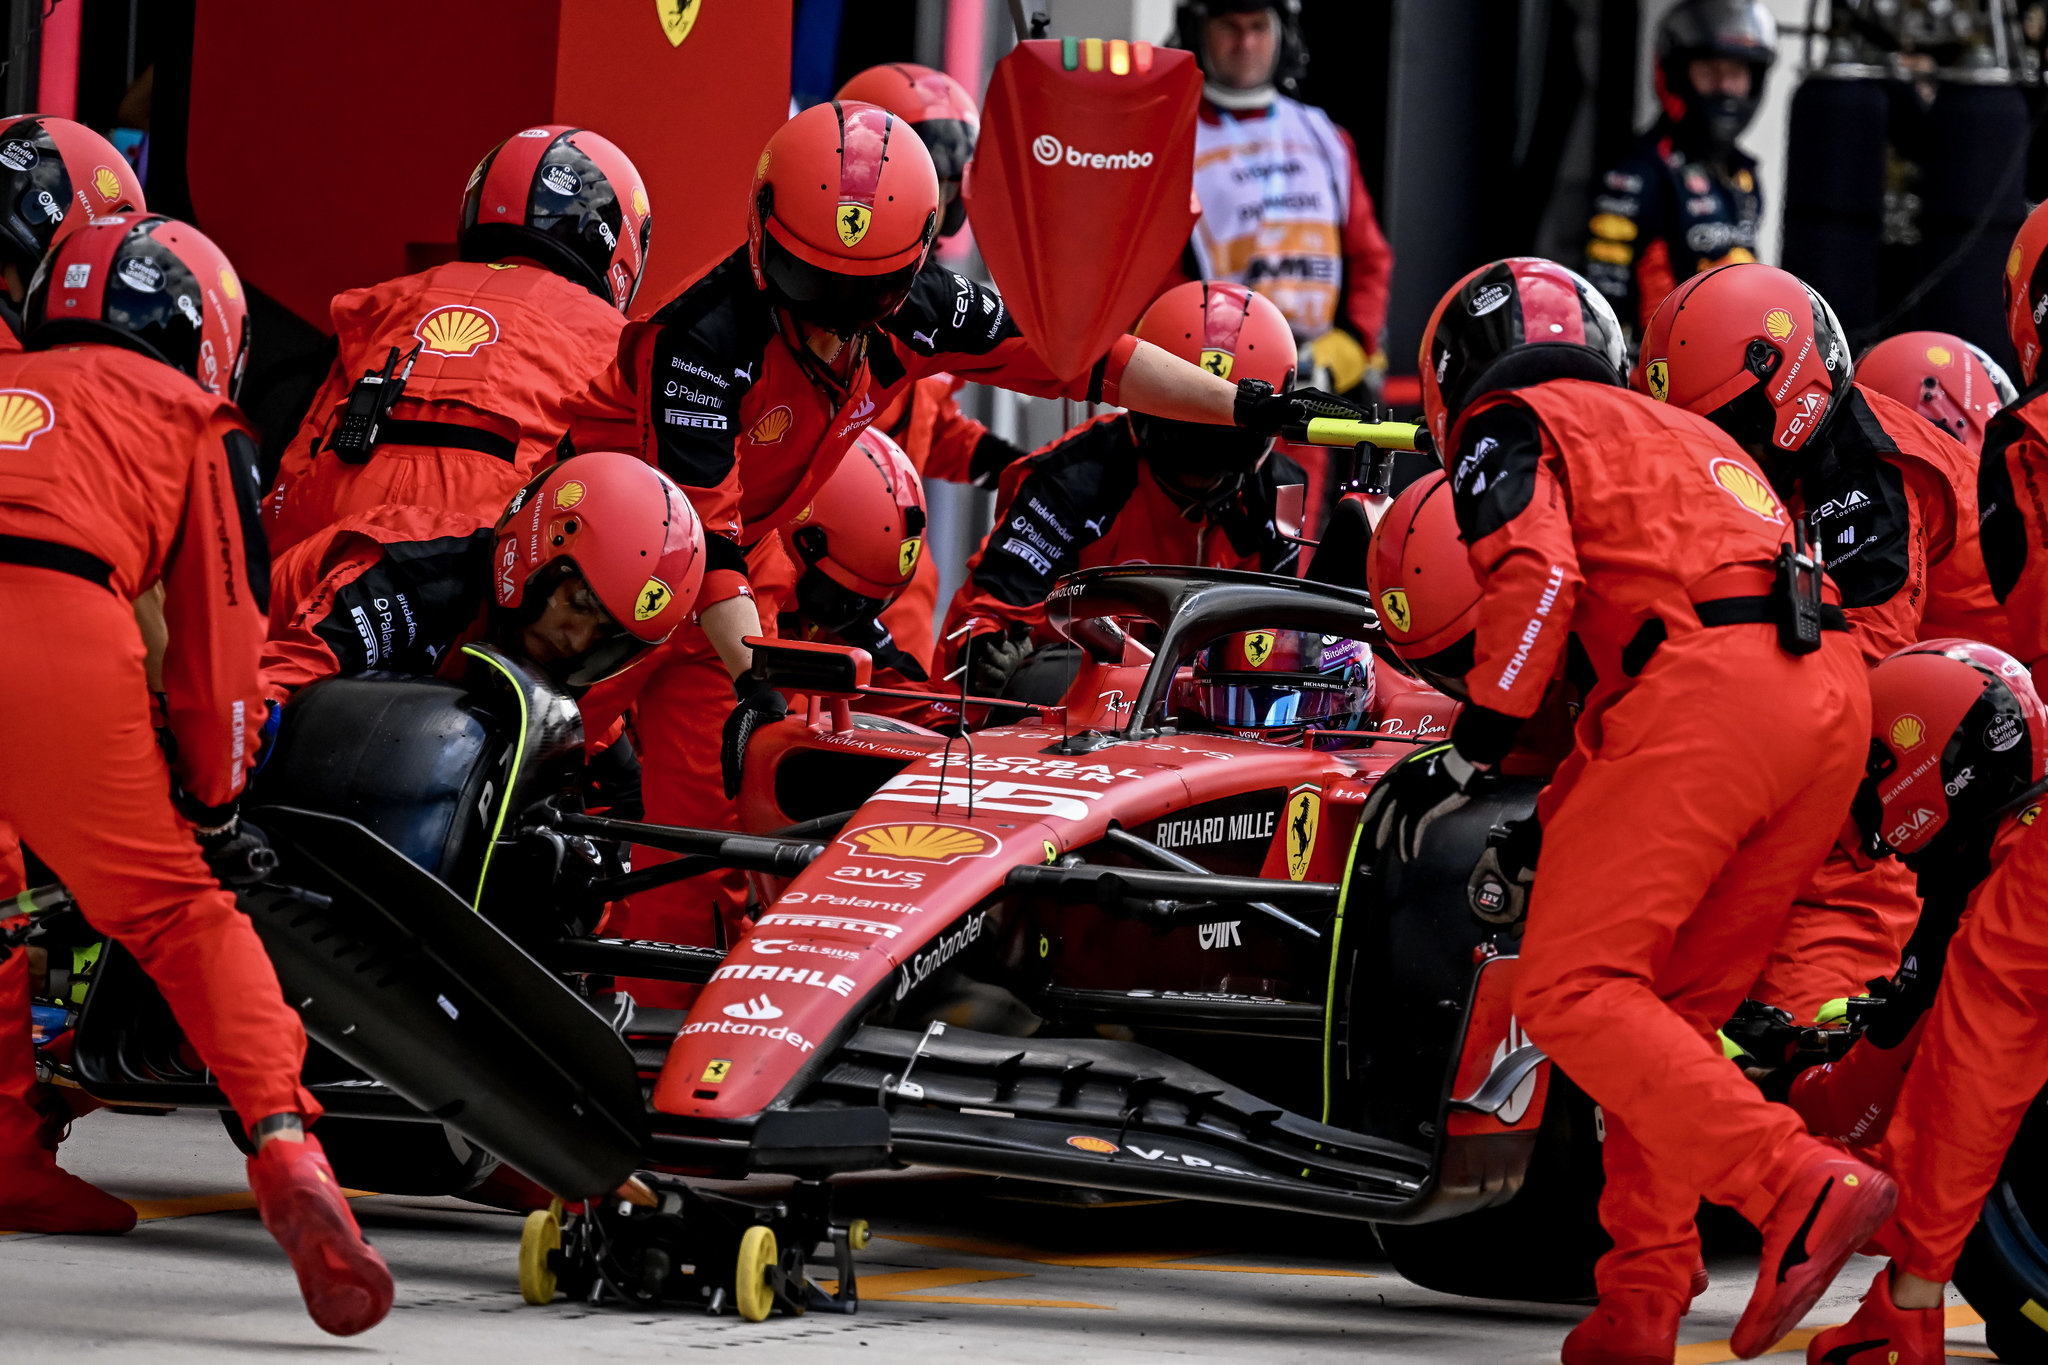 Parada de Ferrari con Carlos Sainz.